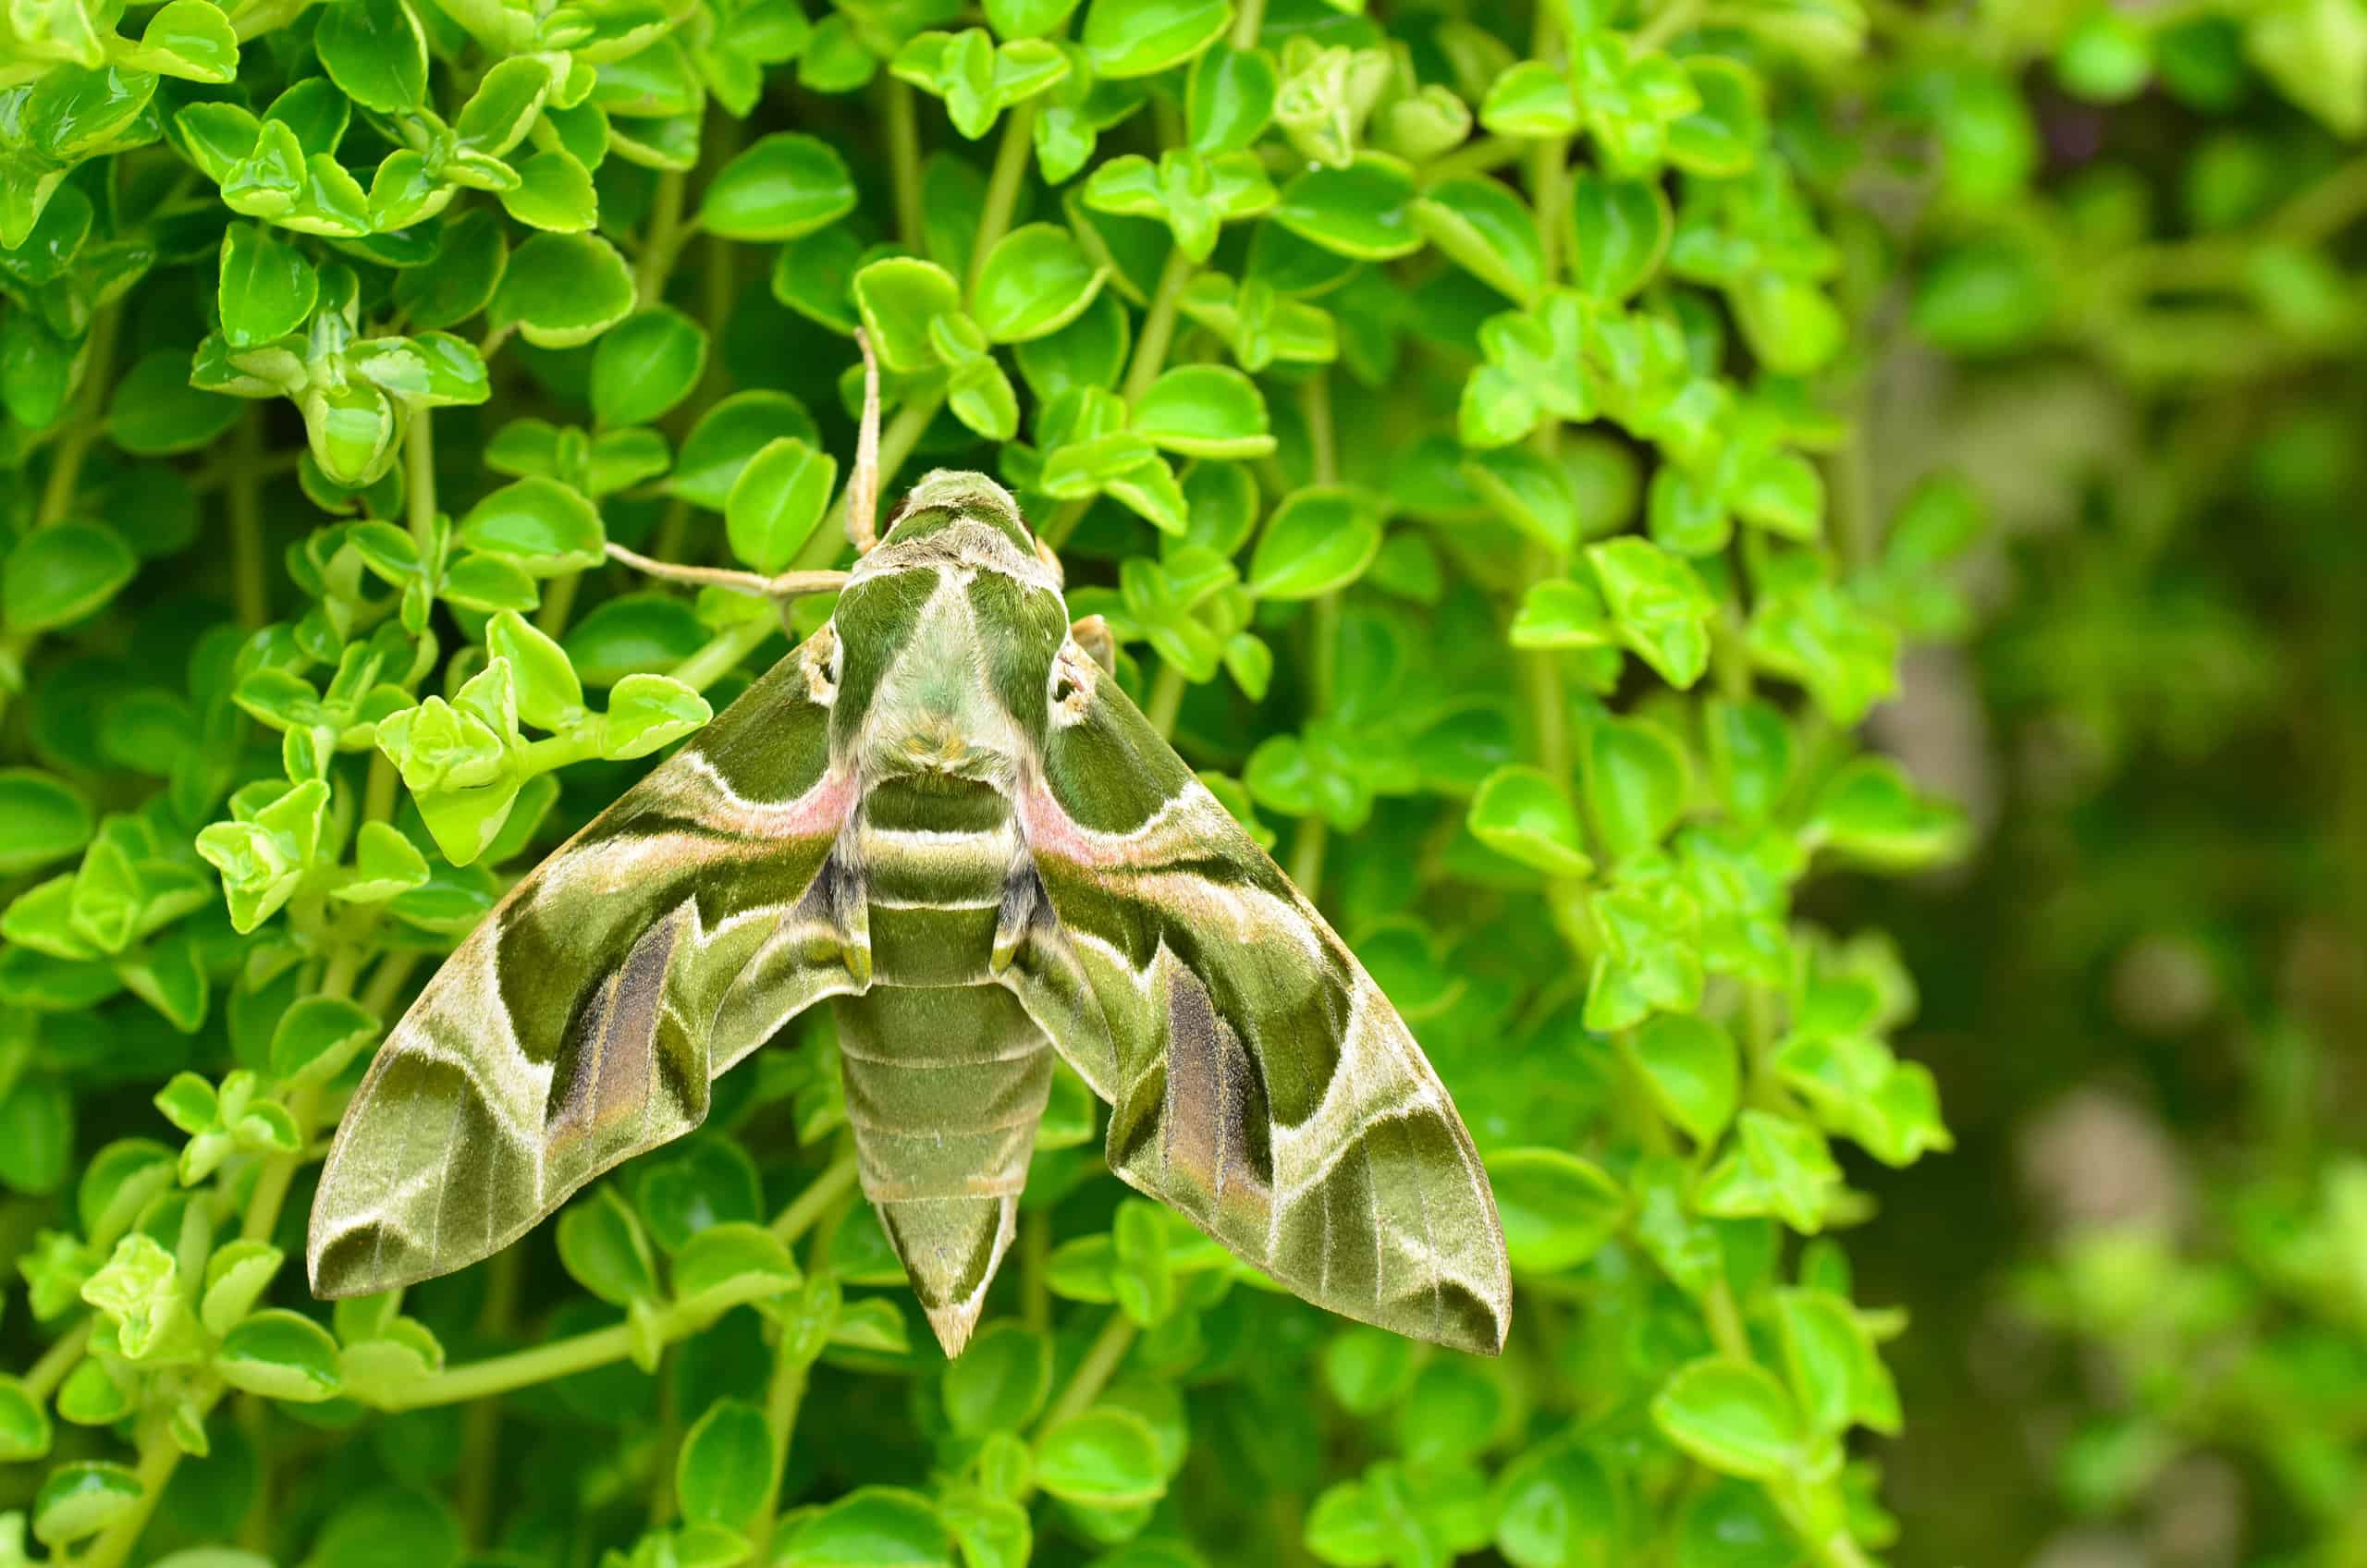 https://a-z-animals.com/media/2022/08/Oleander-Hawk-Moth-on-Green-Leaves.jpg